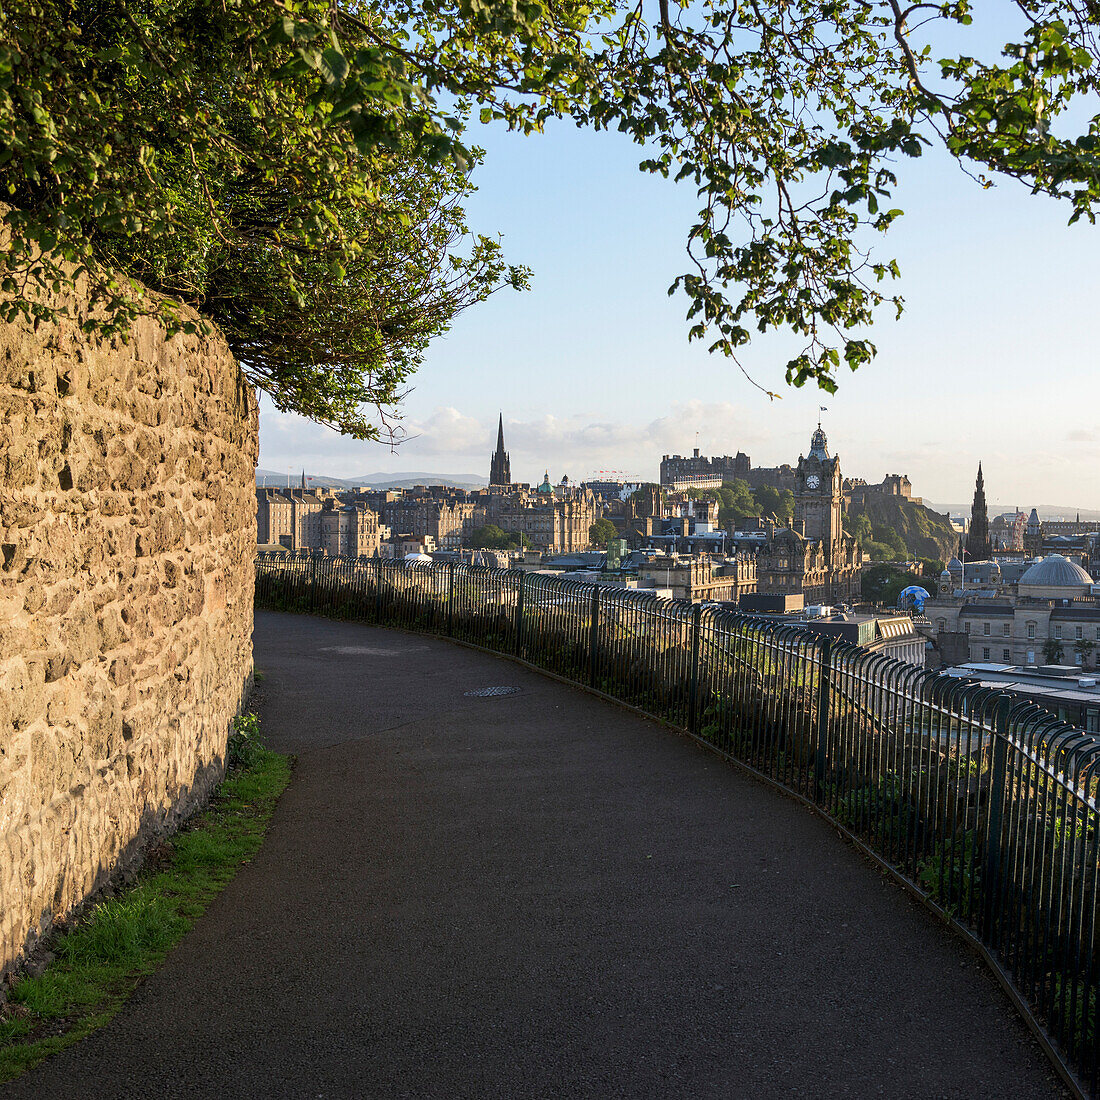 'Walkway with stone wall and railing, Calton Hill; Edinburgh, Scotland'